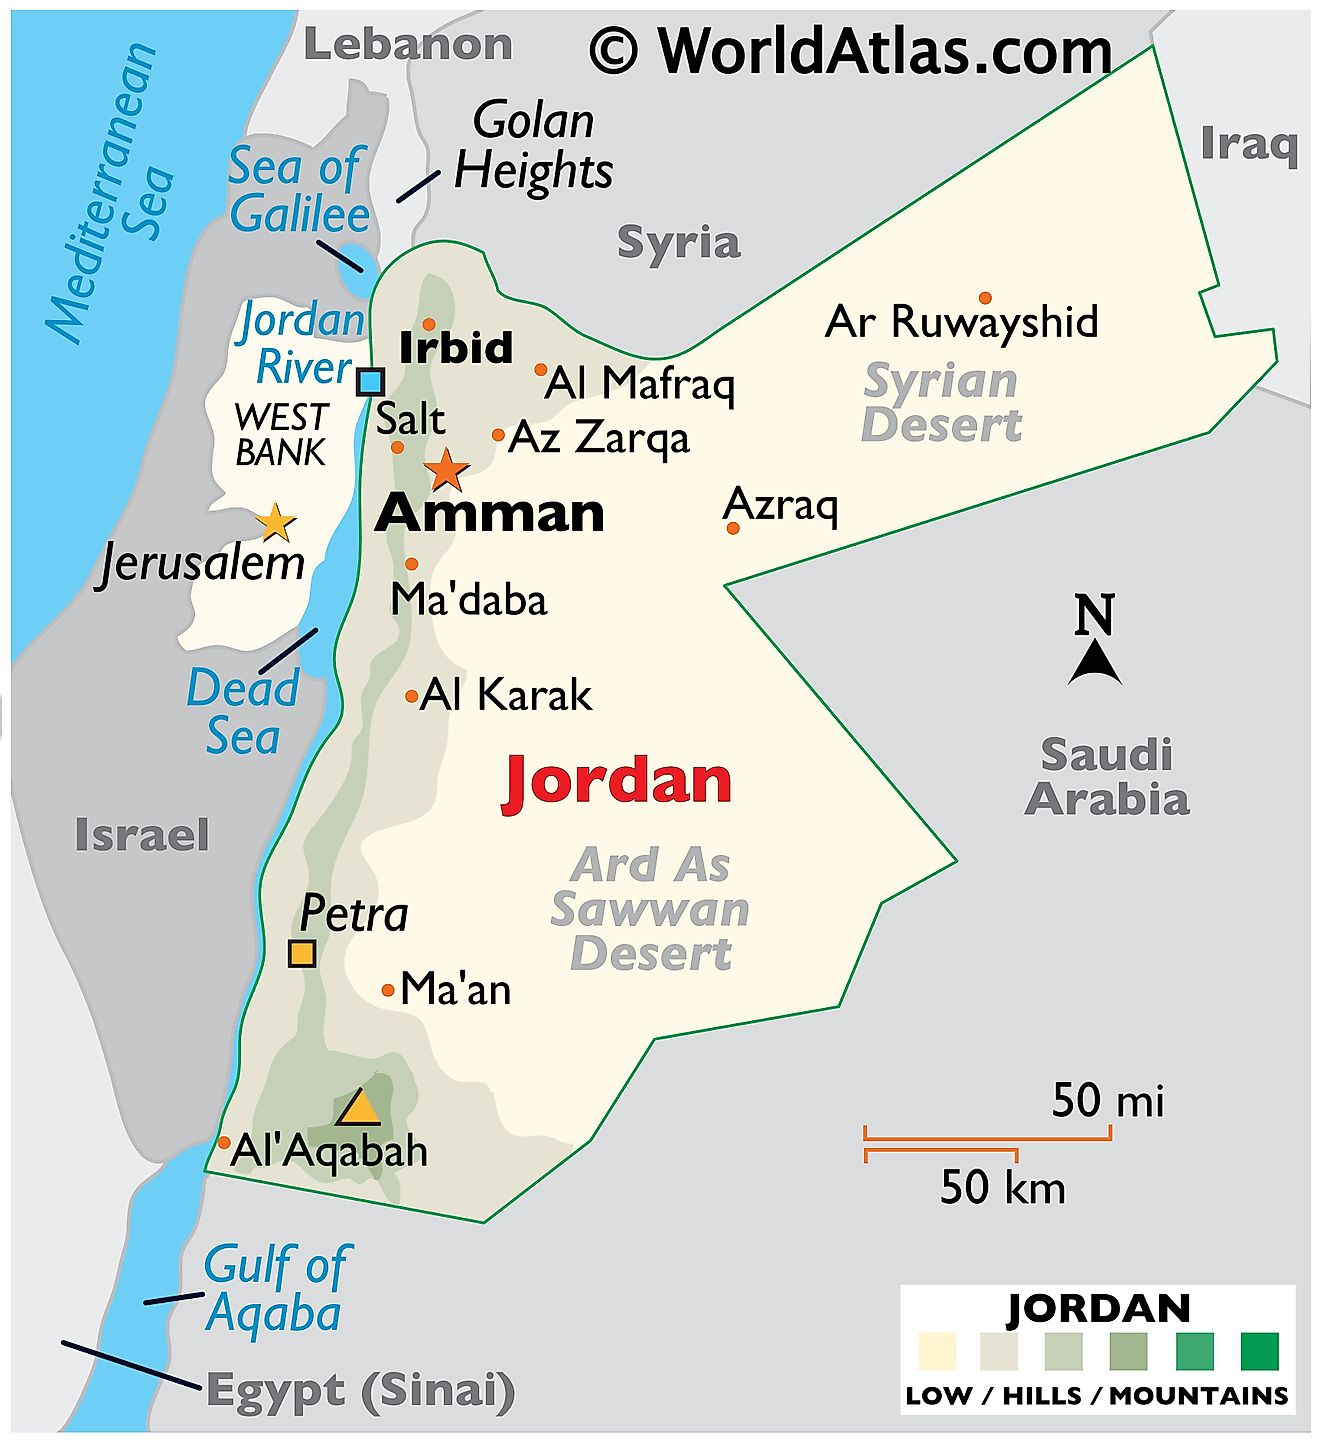 Physical Map of Jordan showing relief, highest point, Jordan River, Dead Sea, Syria Desert, and Ard As Sawwan Desert.